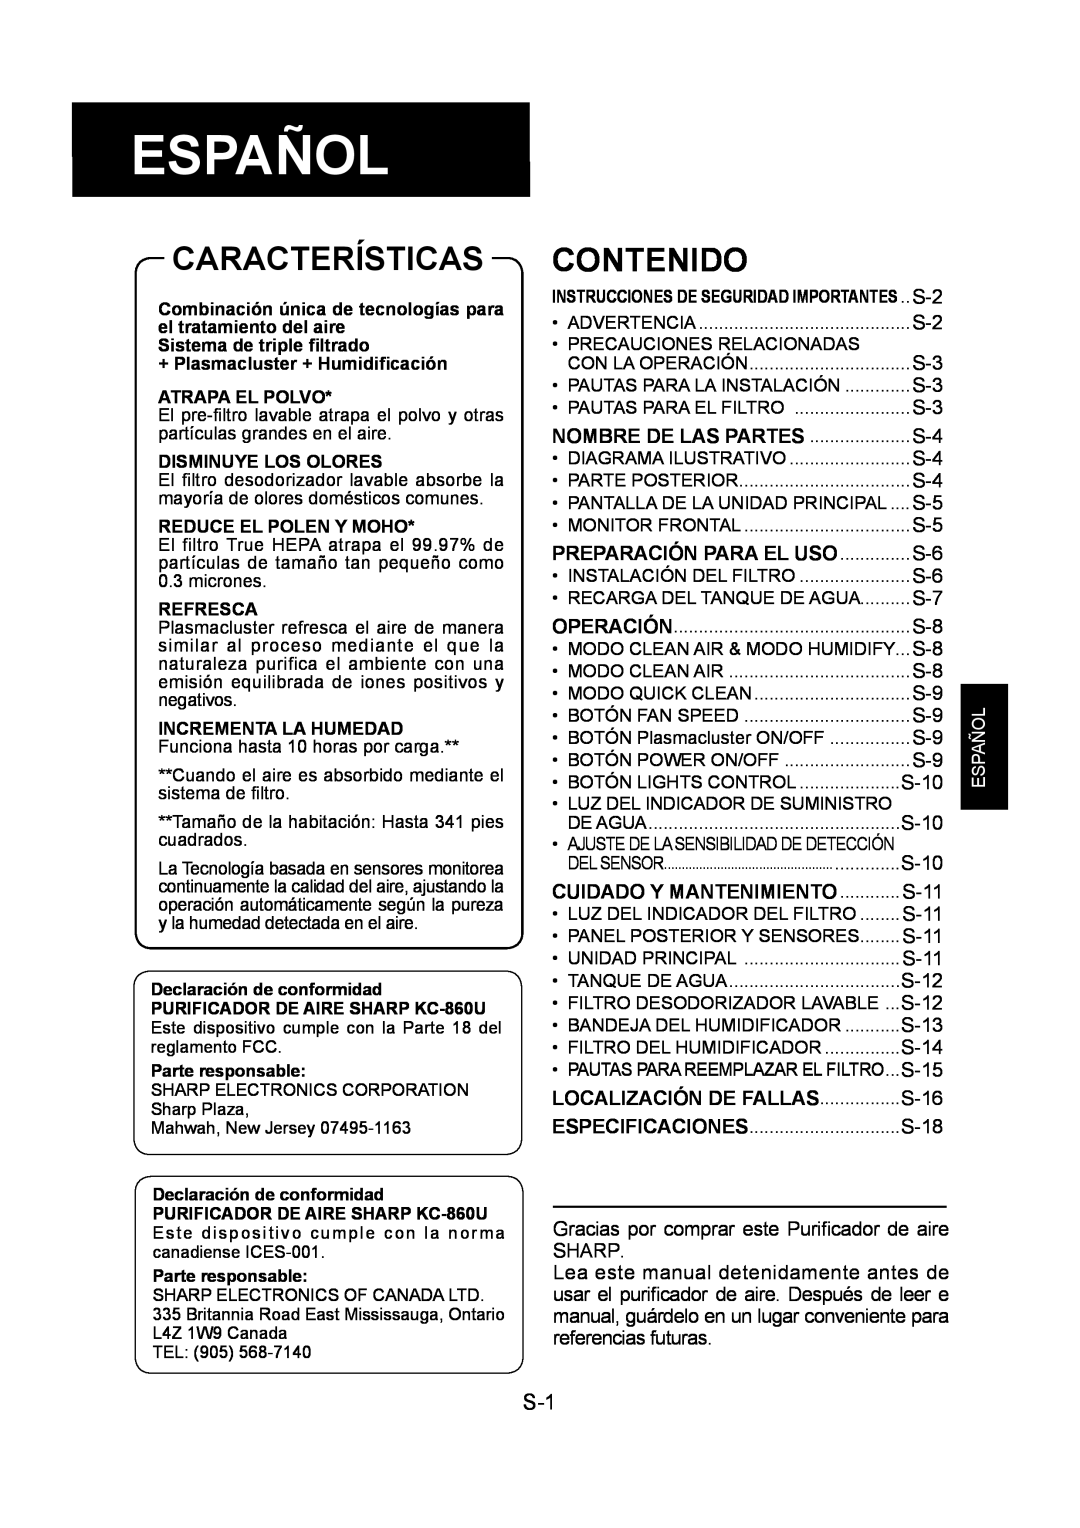 Sharp KC-860U operation manual Español, Características, Contenido 